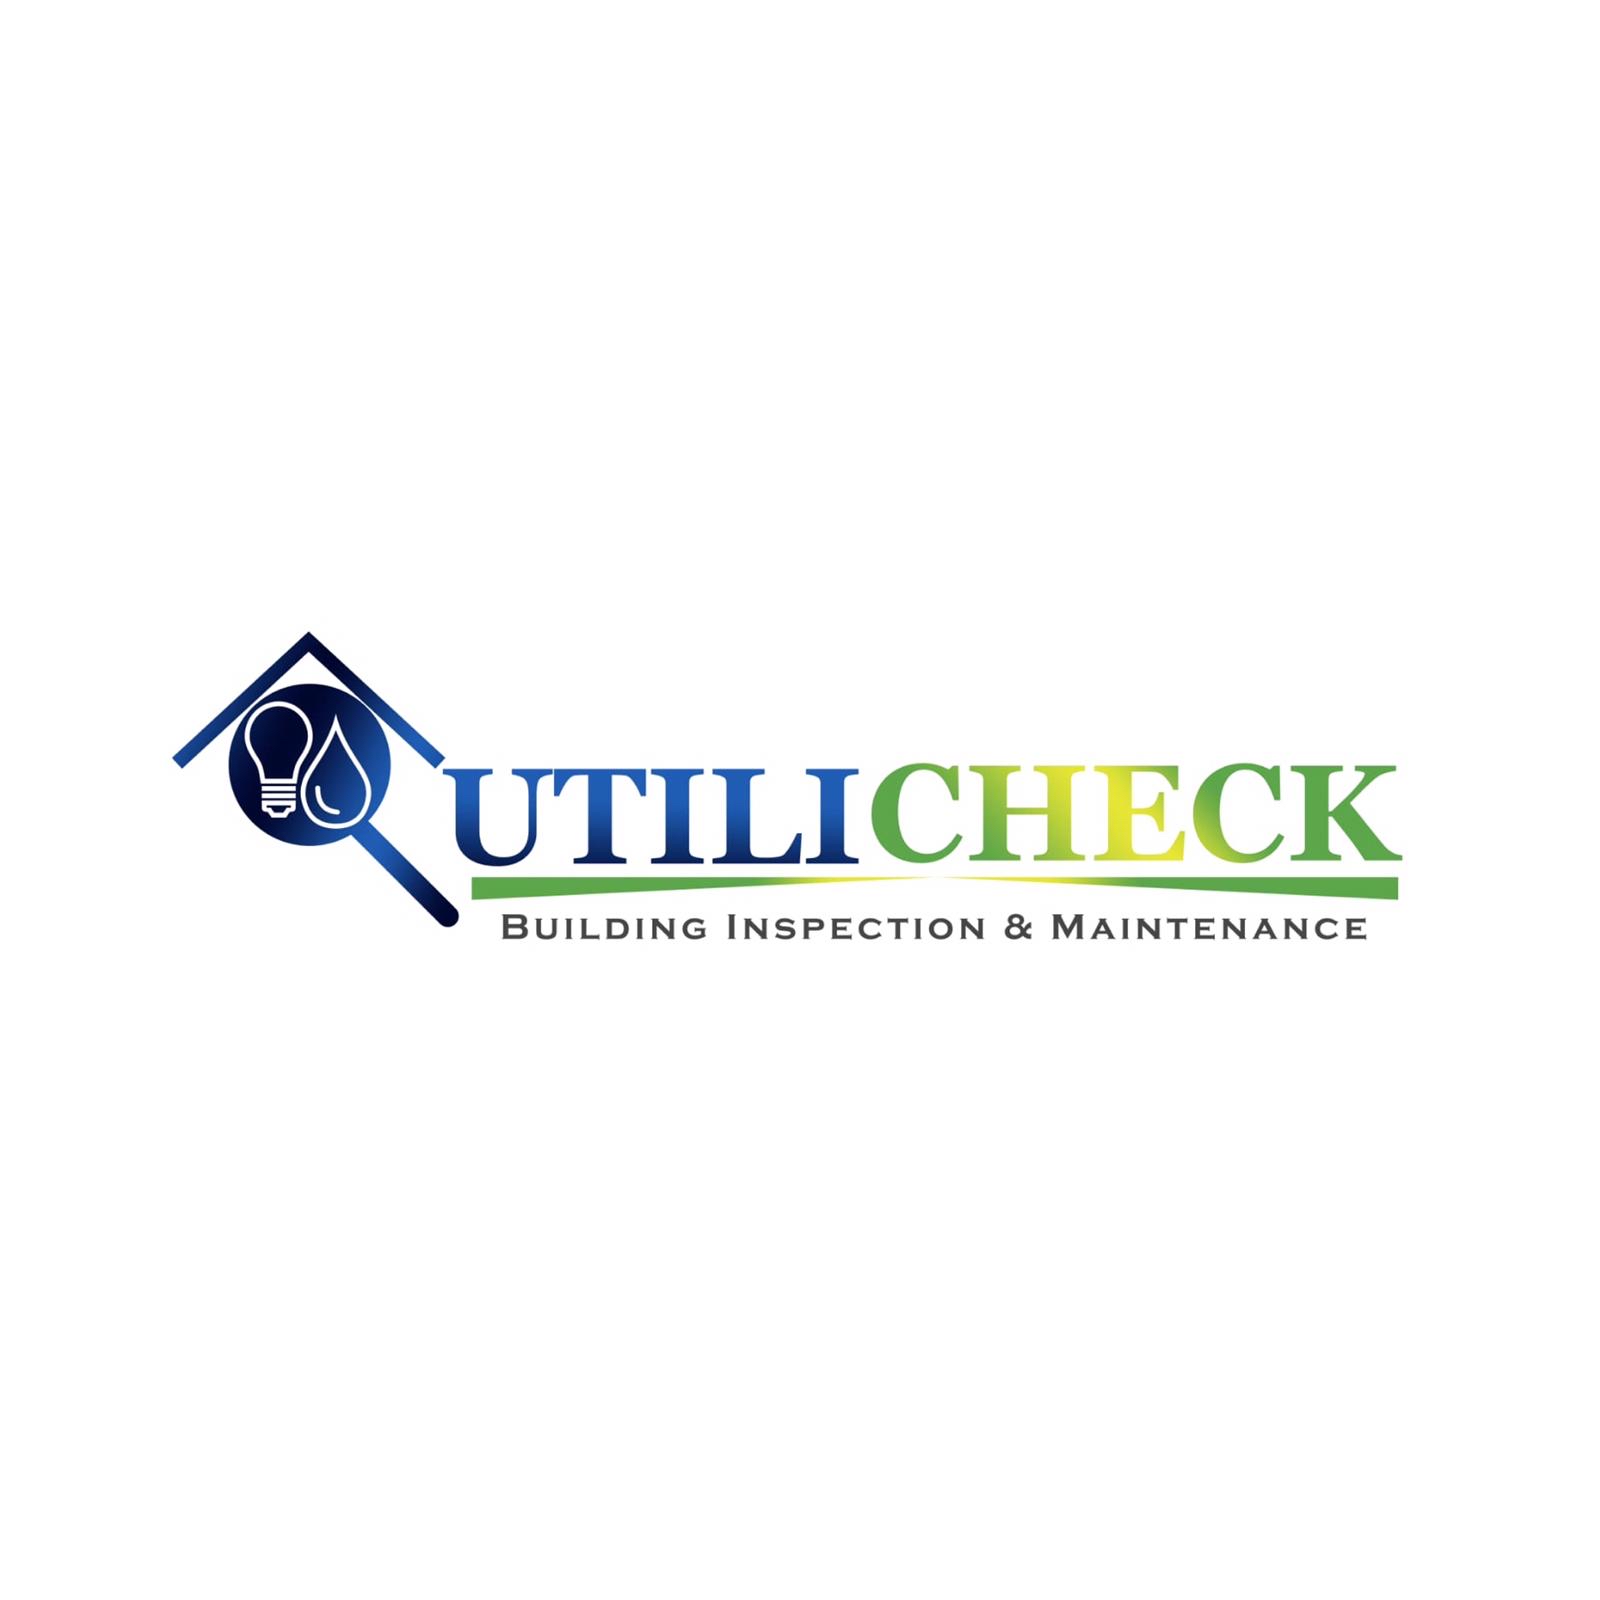 Utilicheck Building Inspection & Maintenance-logo.jpg